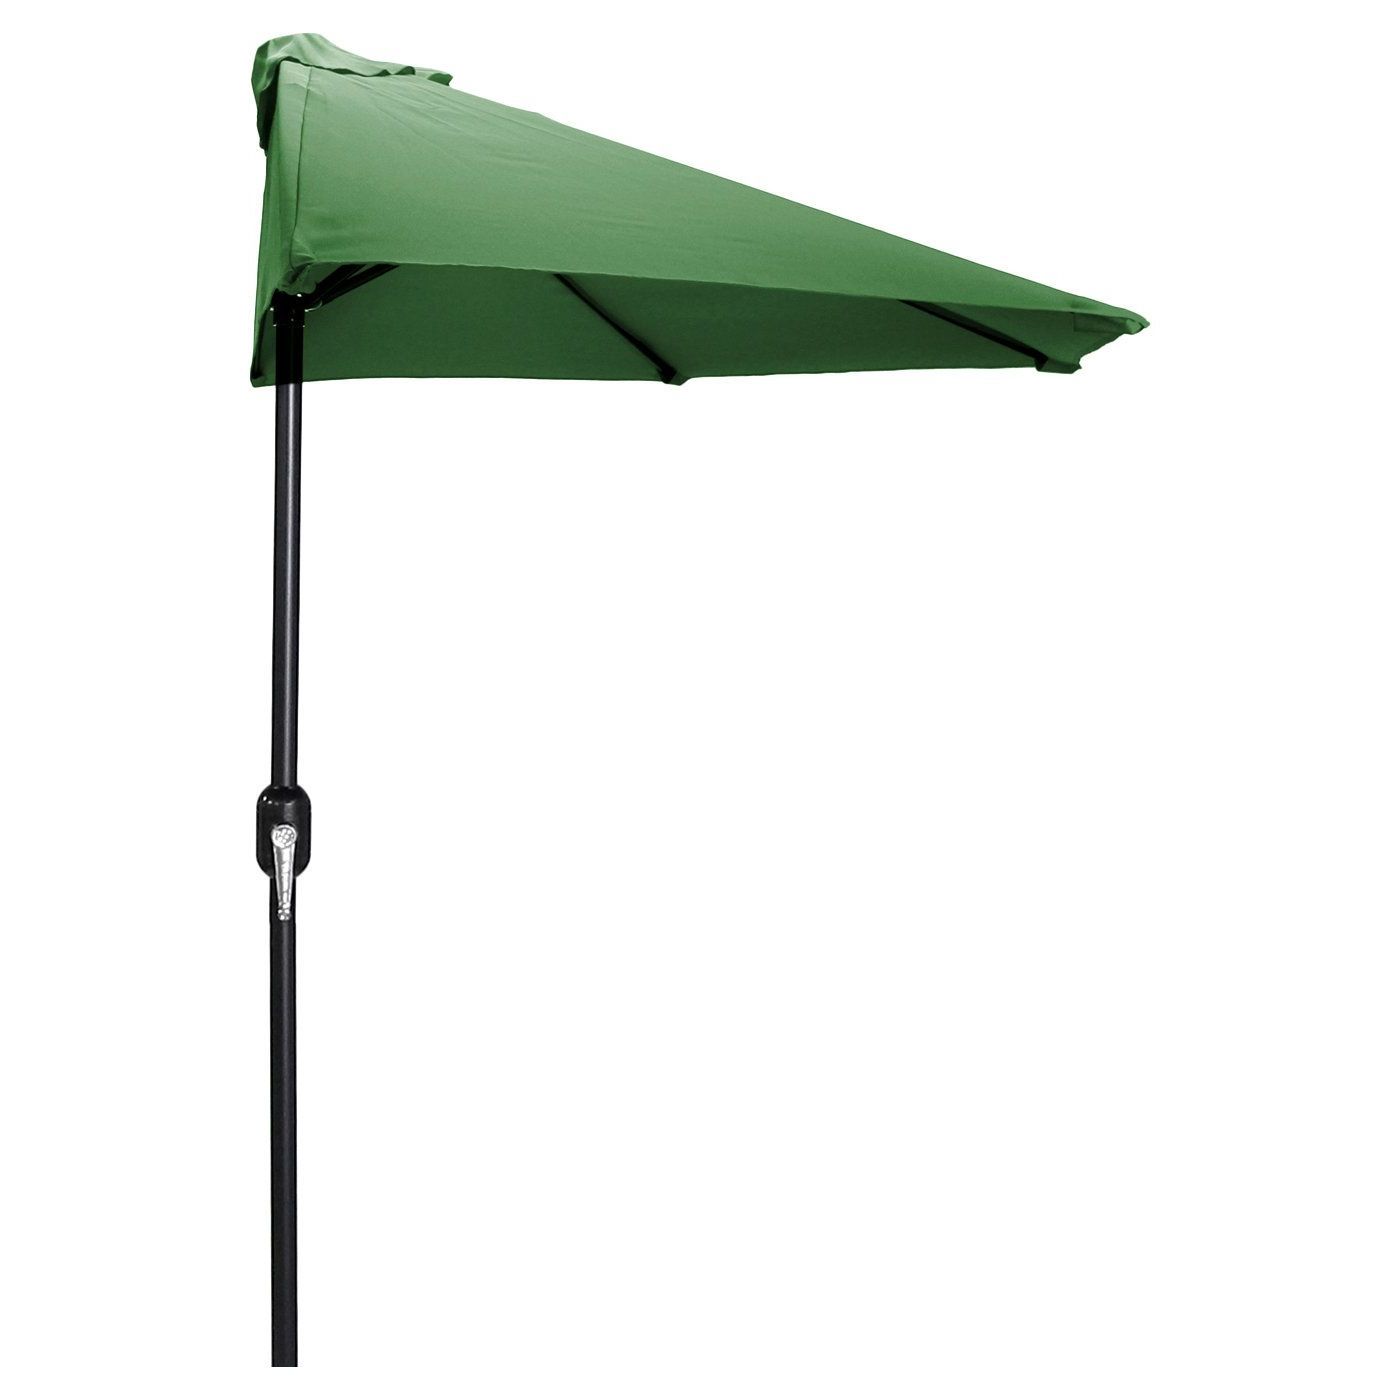 Carlton  Rectangular Market Umbrellas Intended For Current Sheehan Market Umbrella (View 11 of 20)